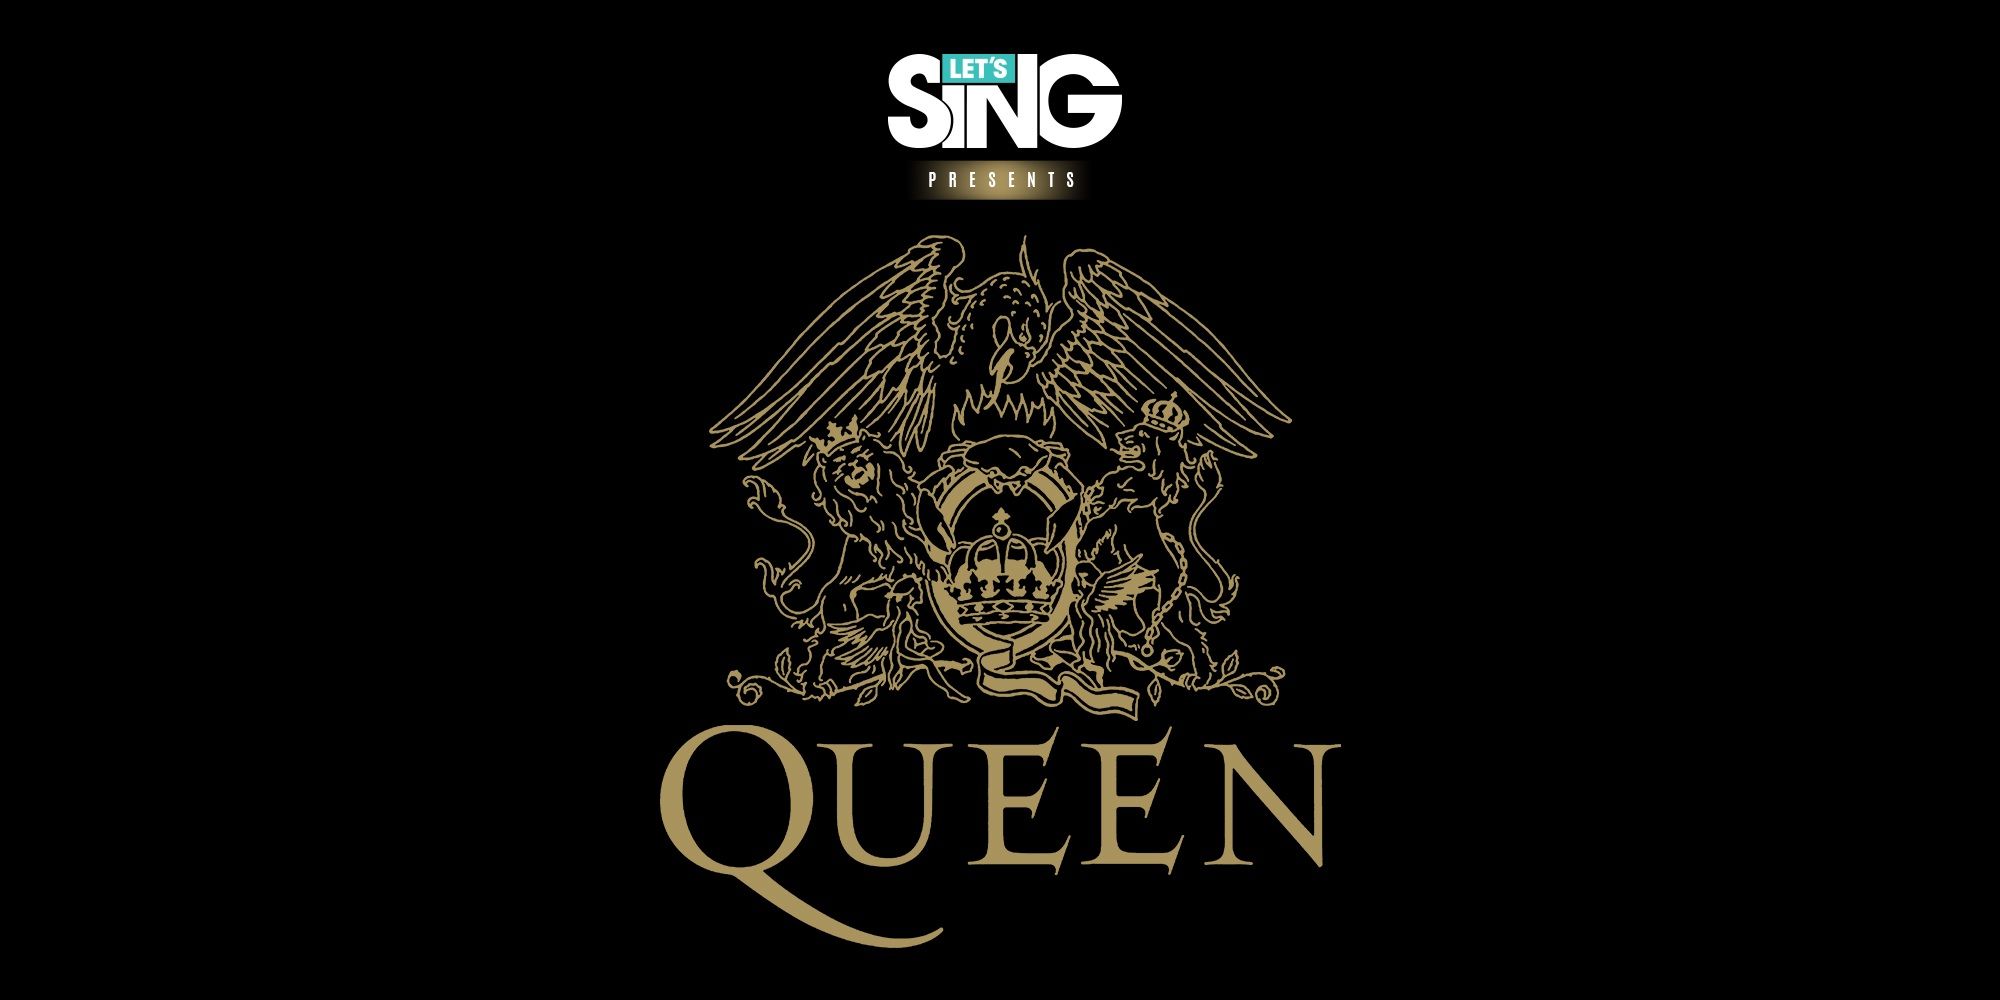 Let’s Sing Queen A Great Karaoke Experience